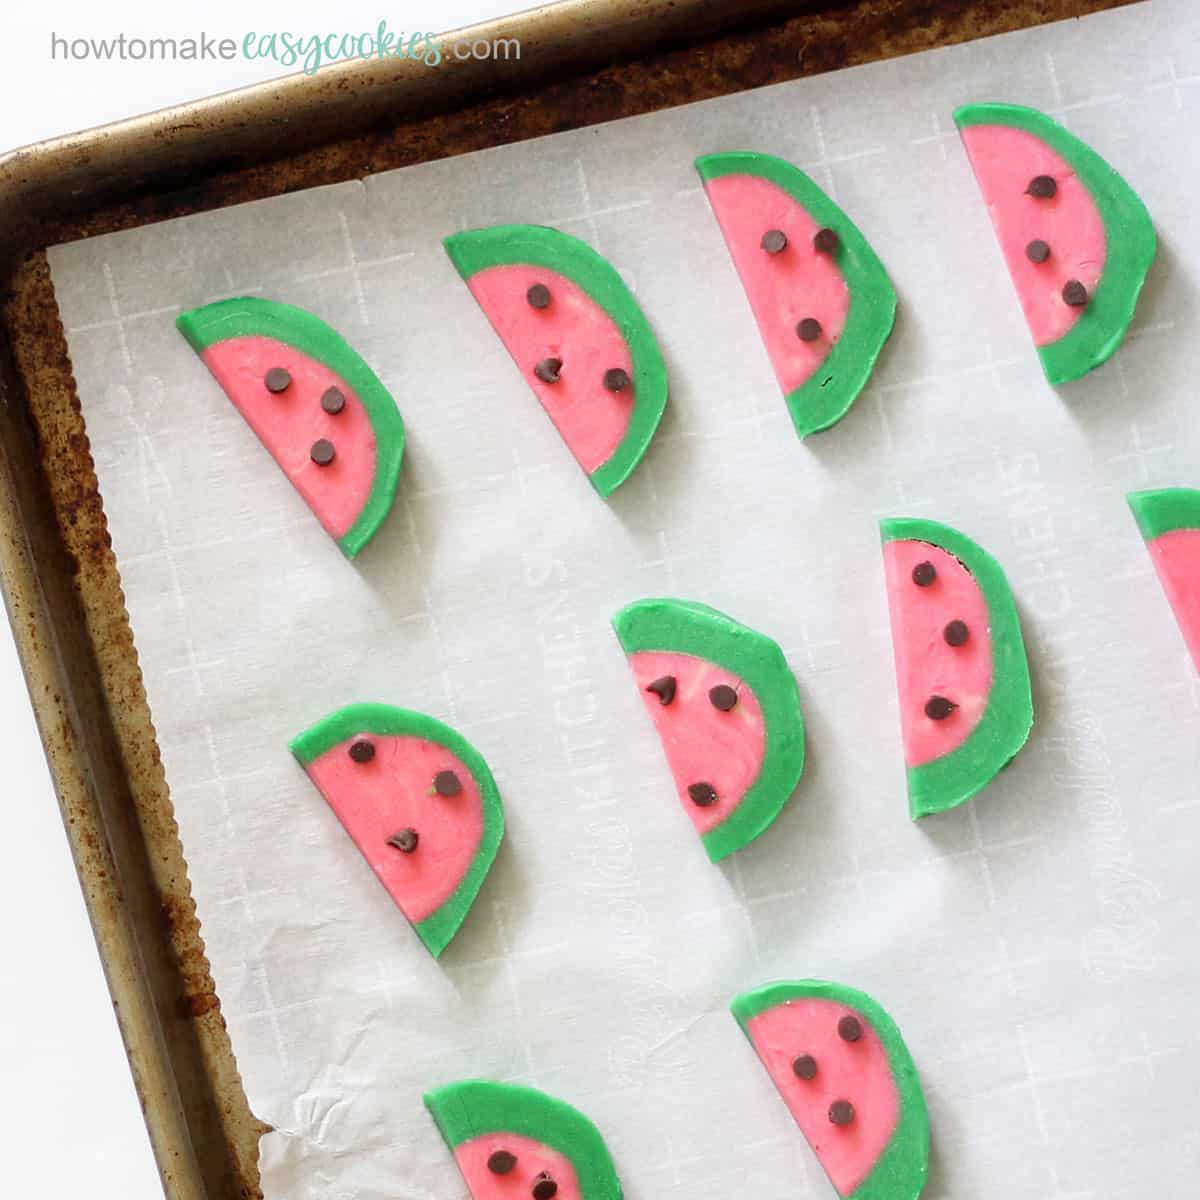 watermelon slice cookies on baking tray